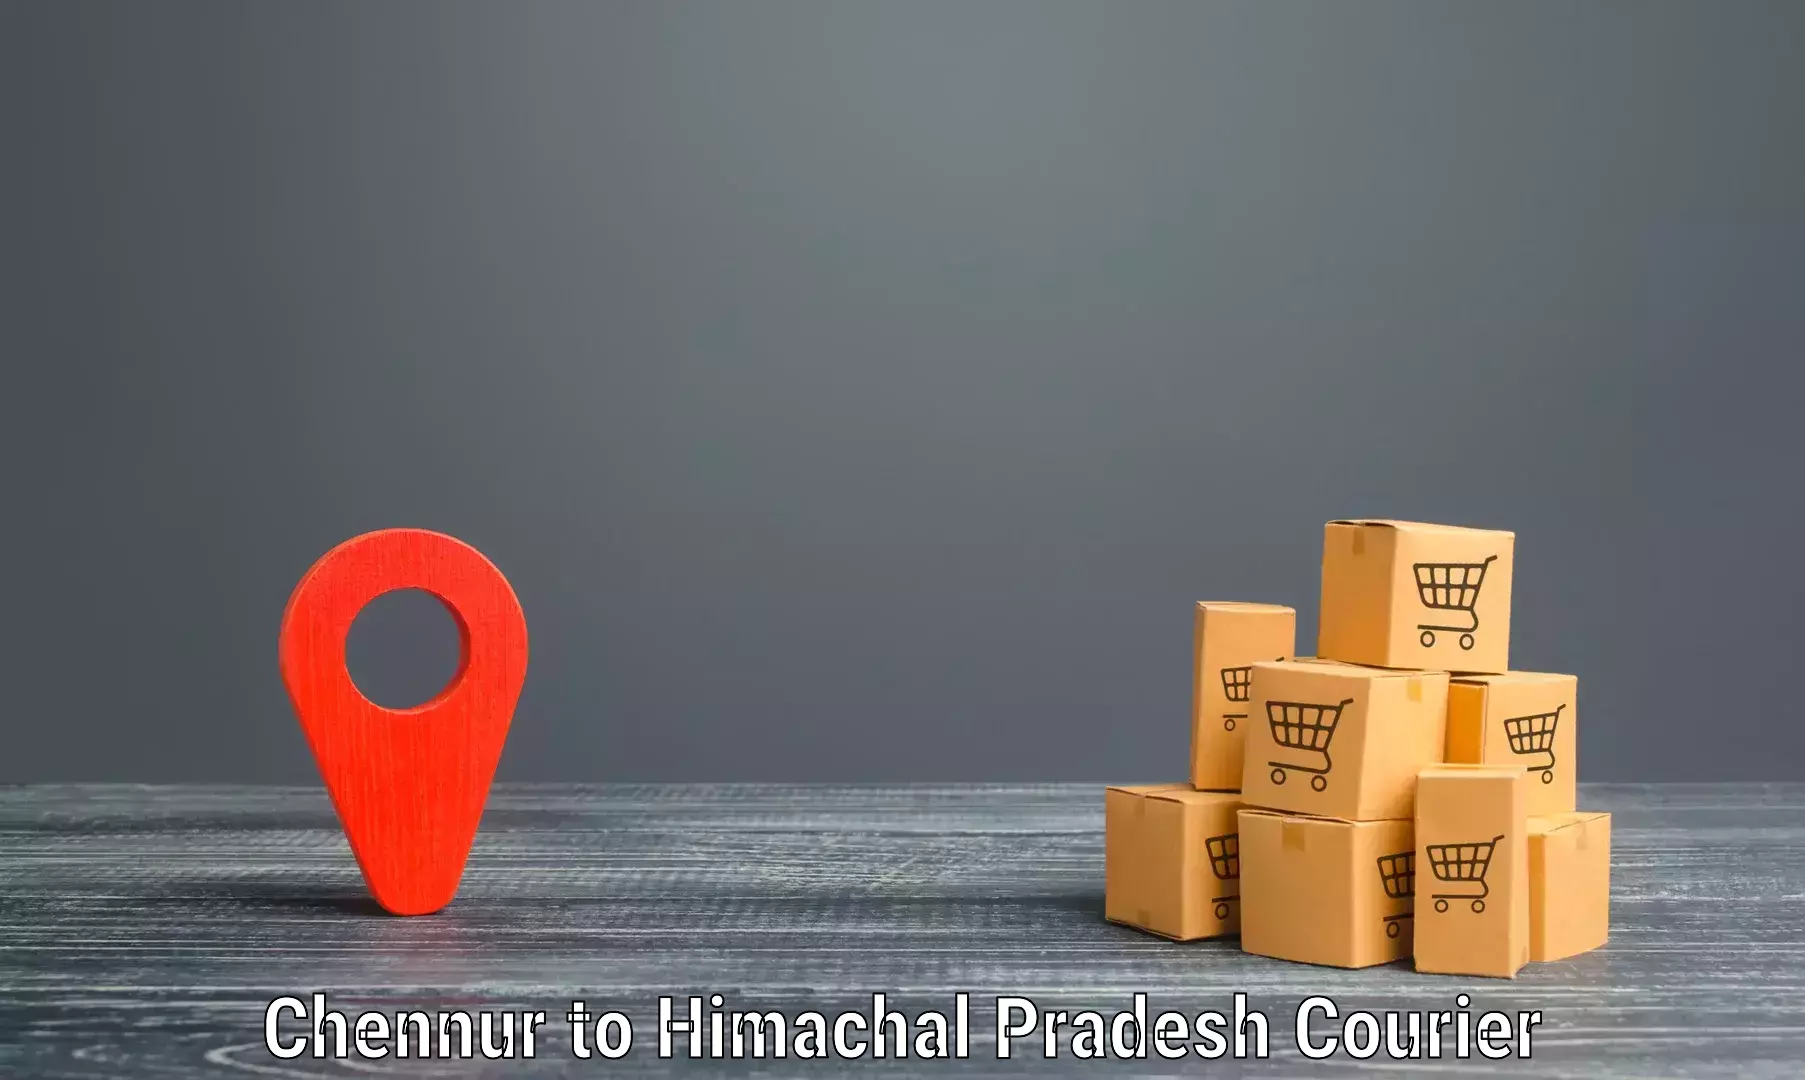 Courier service comparison Chennur to Rehan